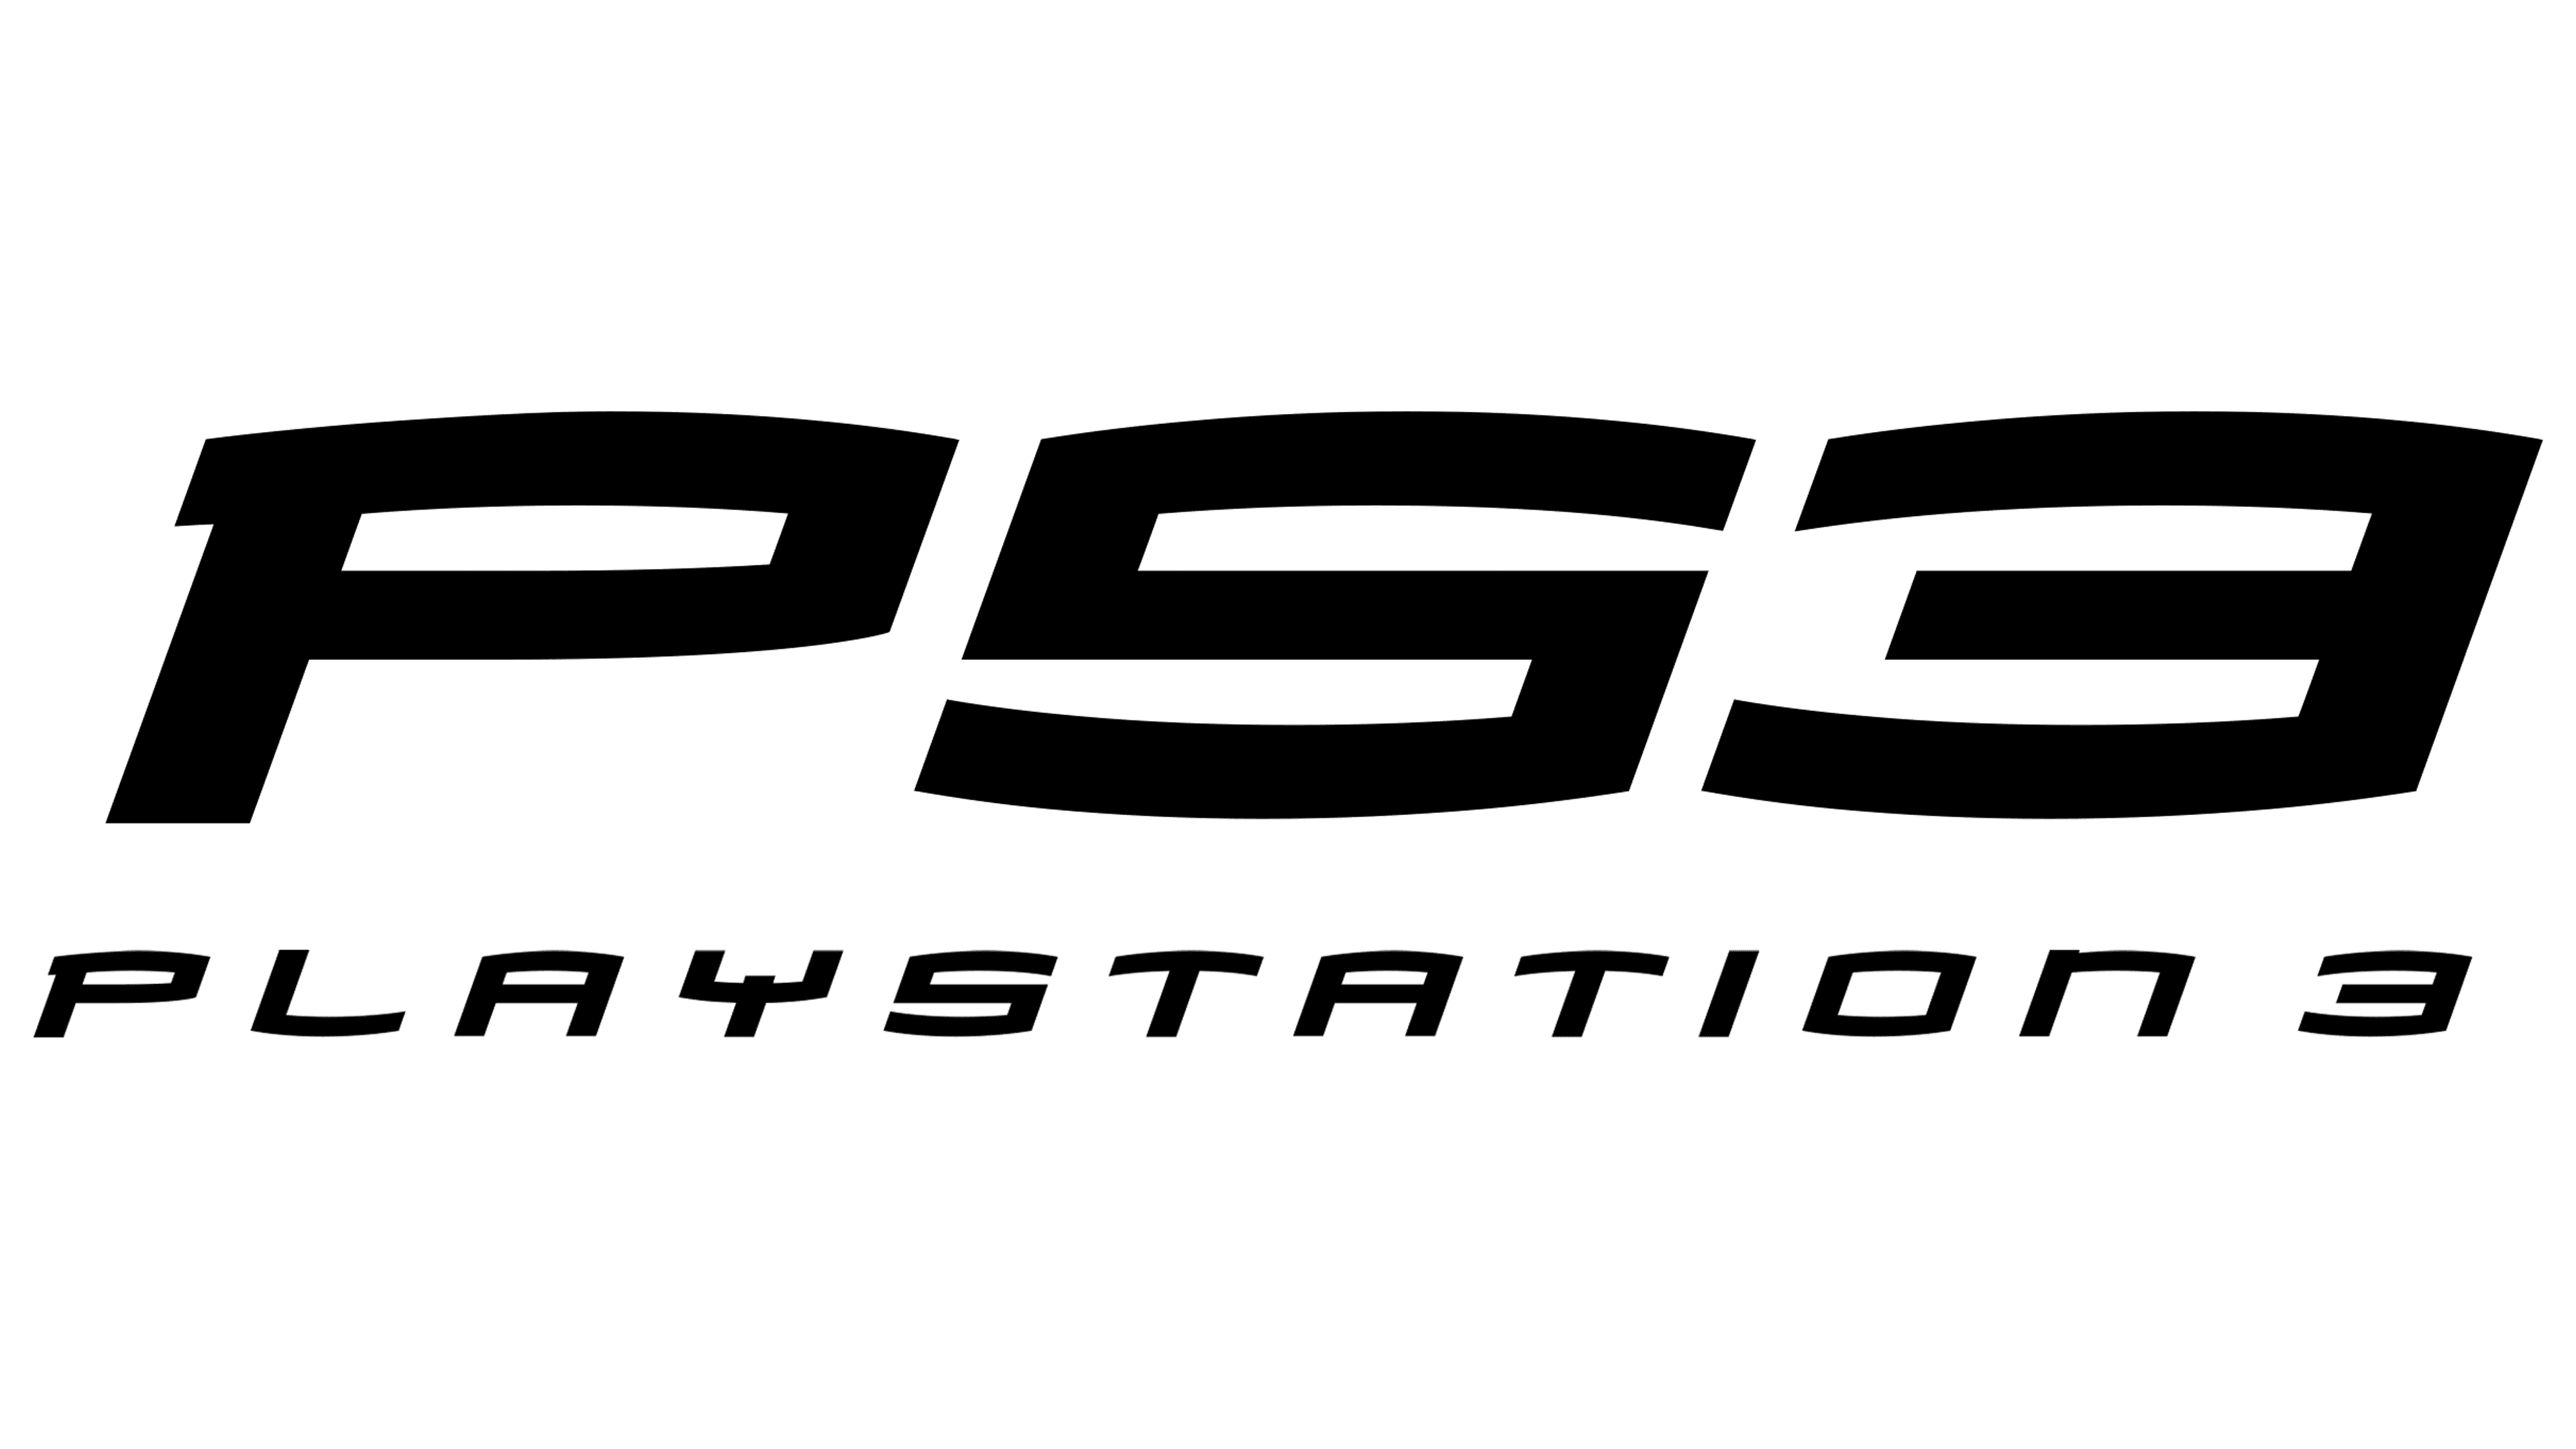 ps3 logo black